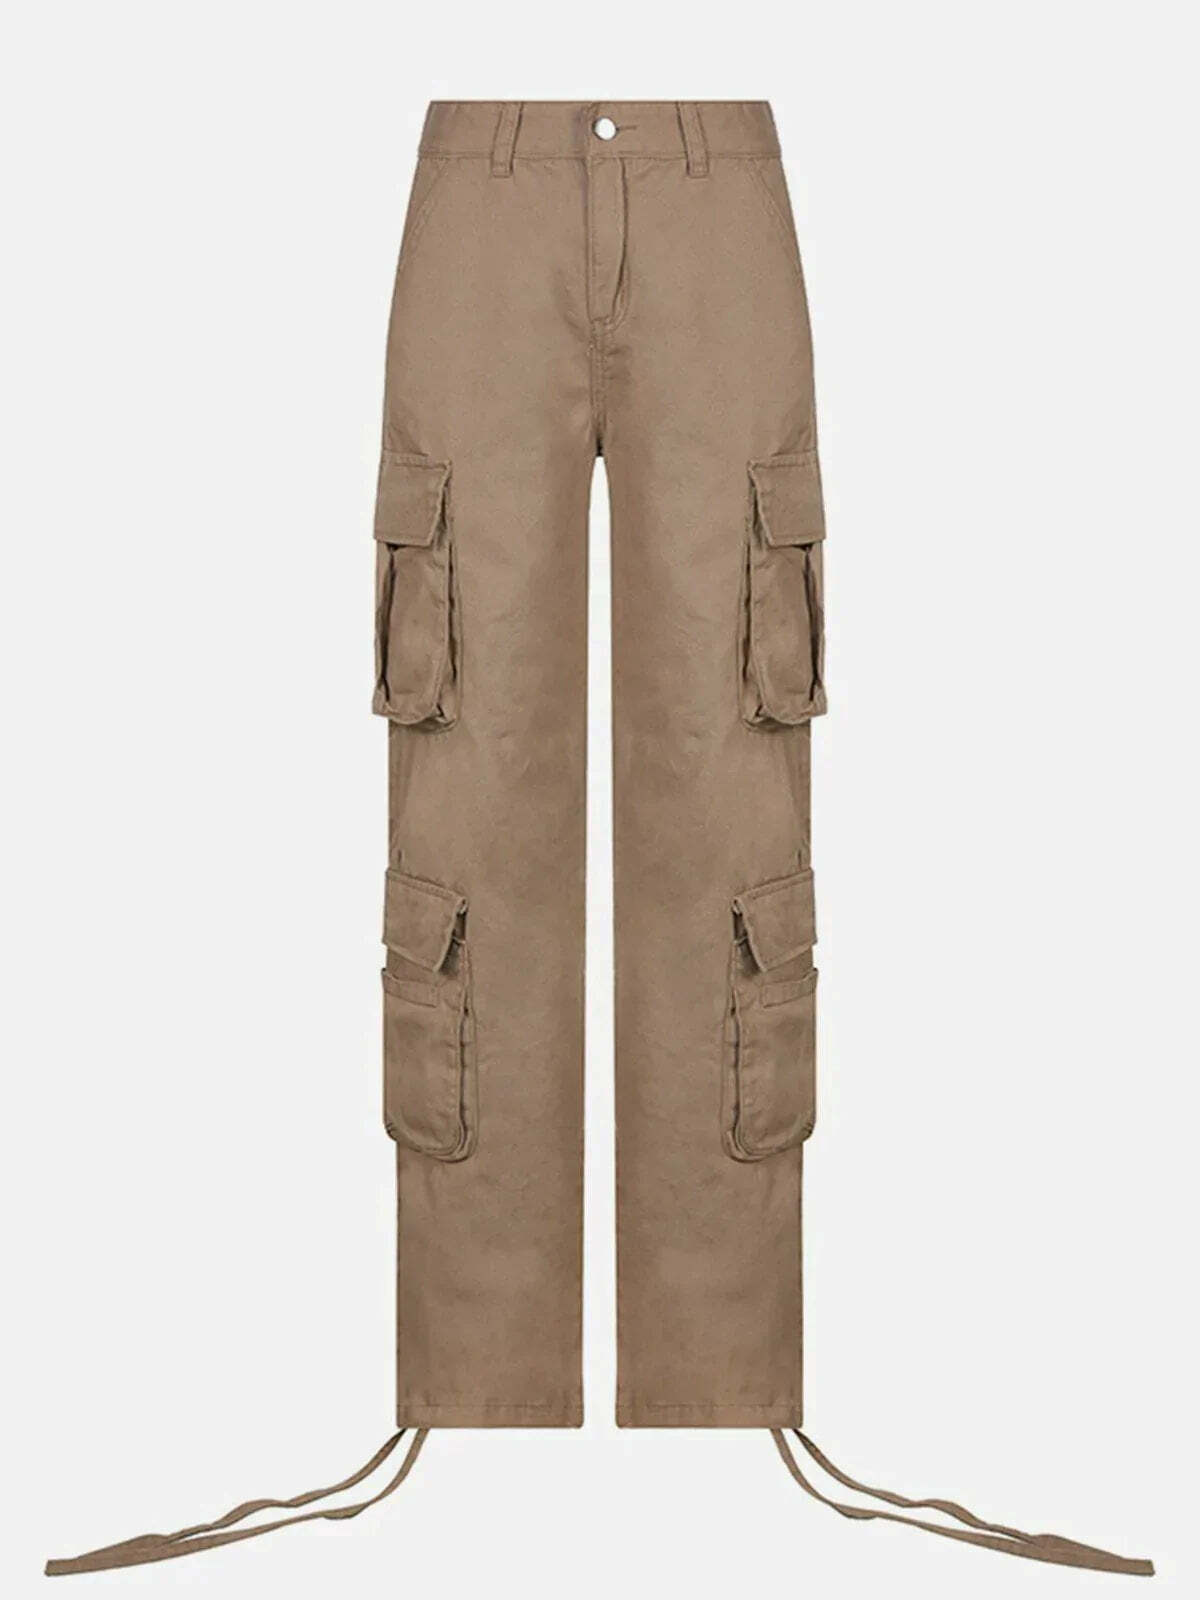 low waist cargo pants edgy & innovative streetwear 3556